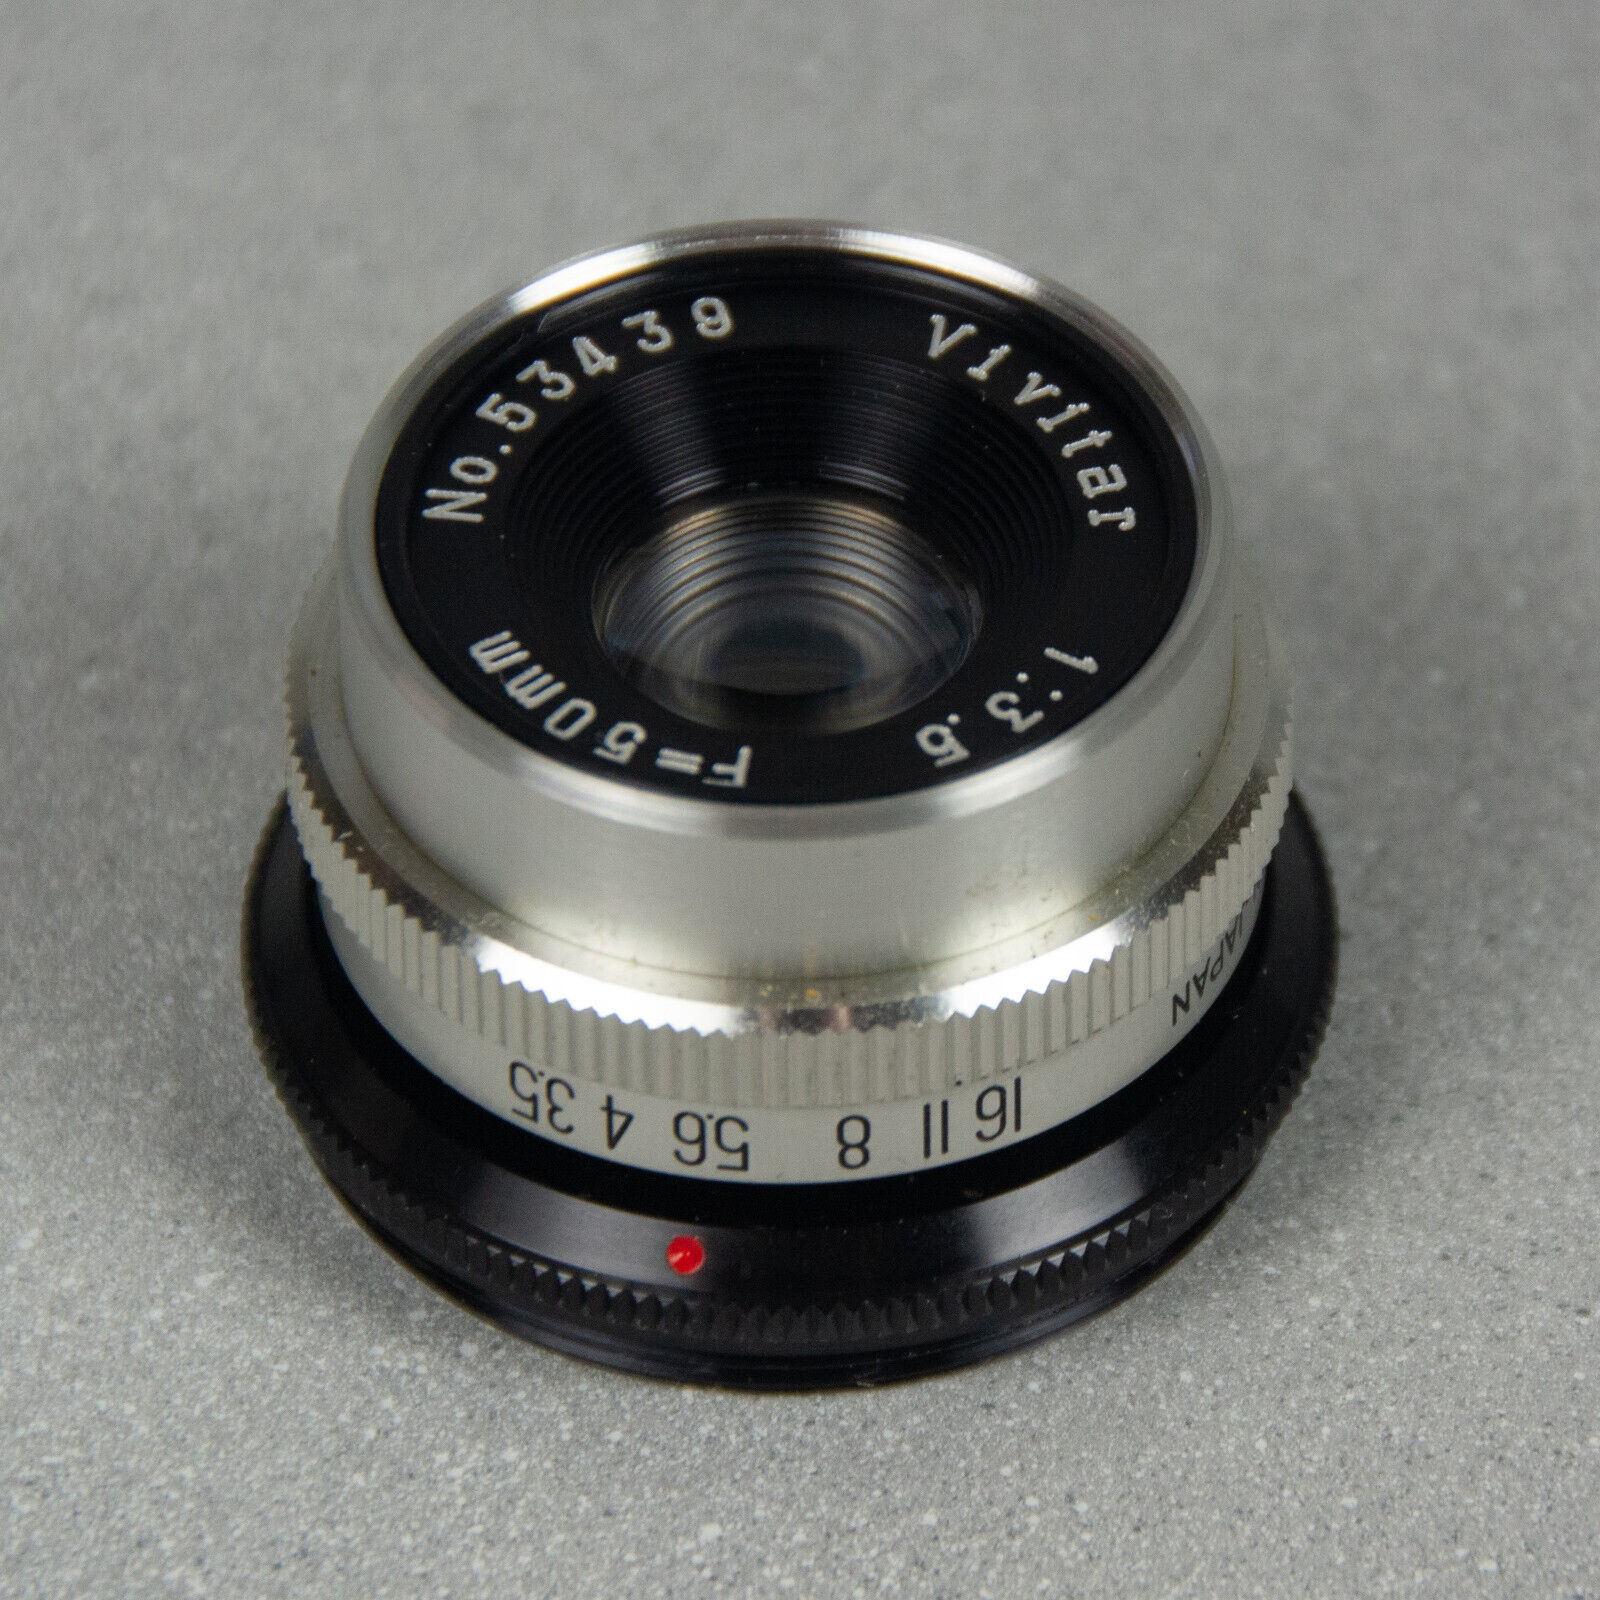 Vivitar 50mm f/3.5 enlargement lens. Scratch And Fungus Free.